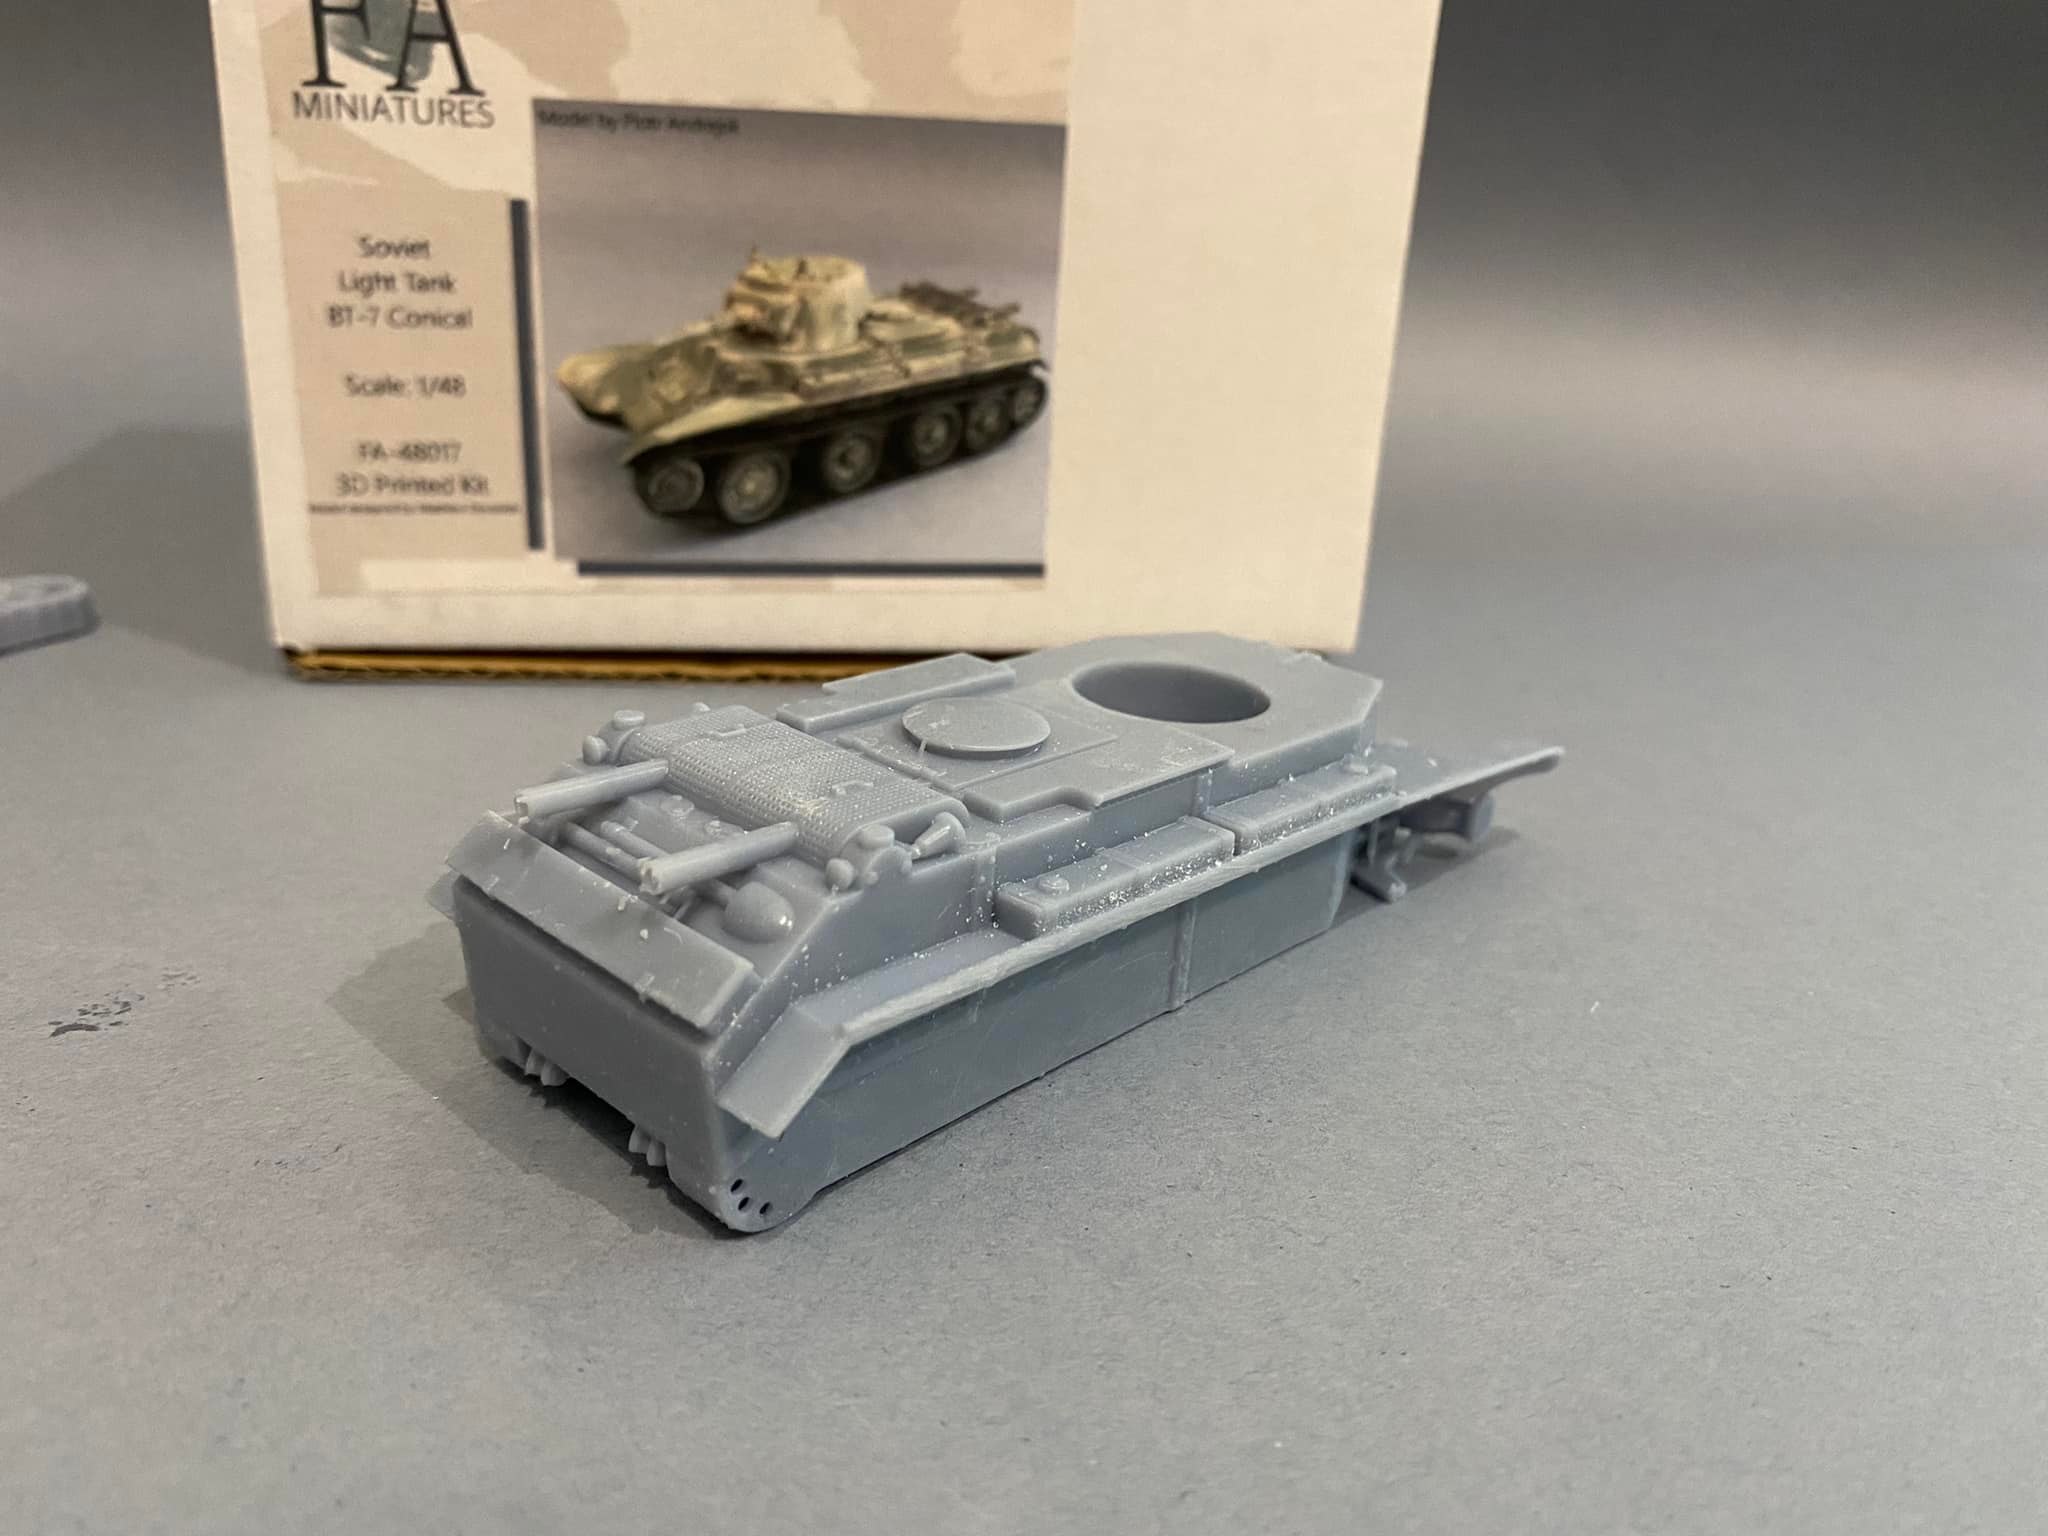 F&A Miniatures FA-48017 - BT-7 Conical Turret Tank